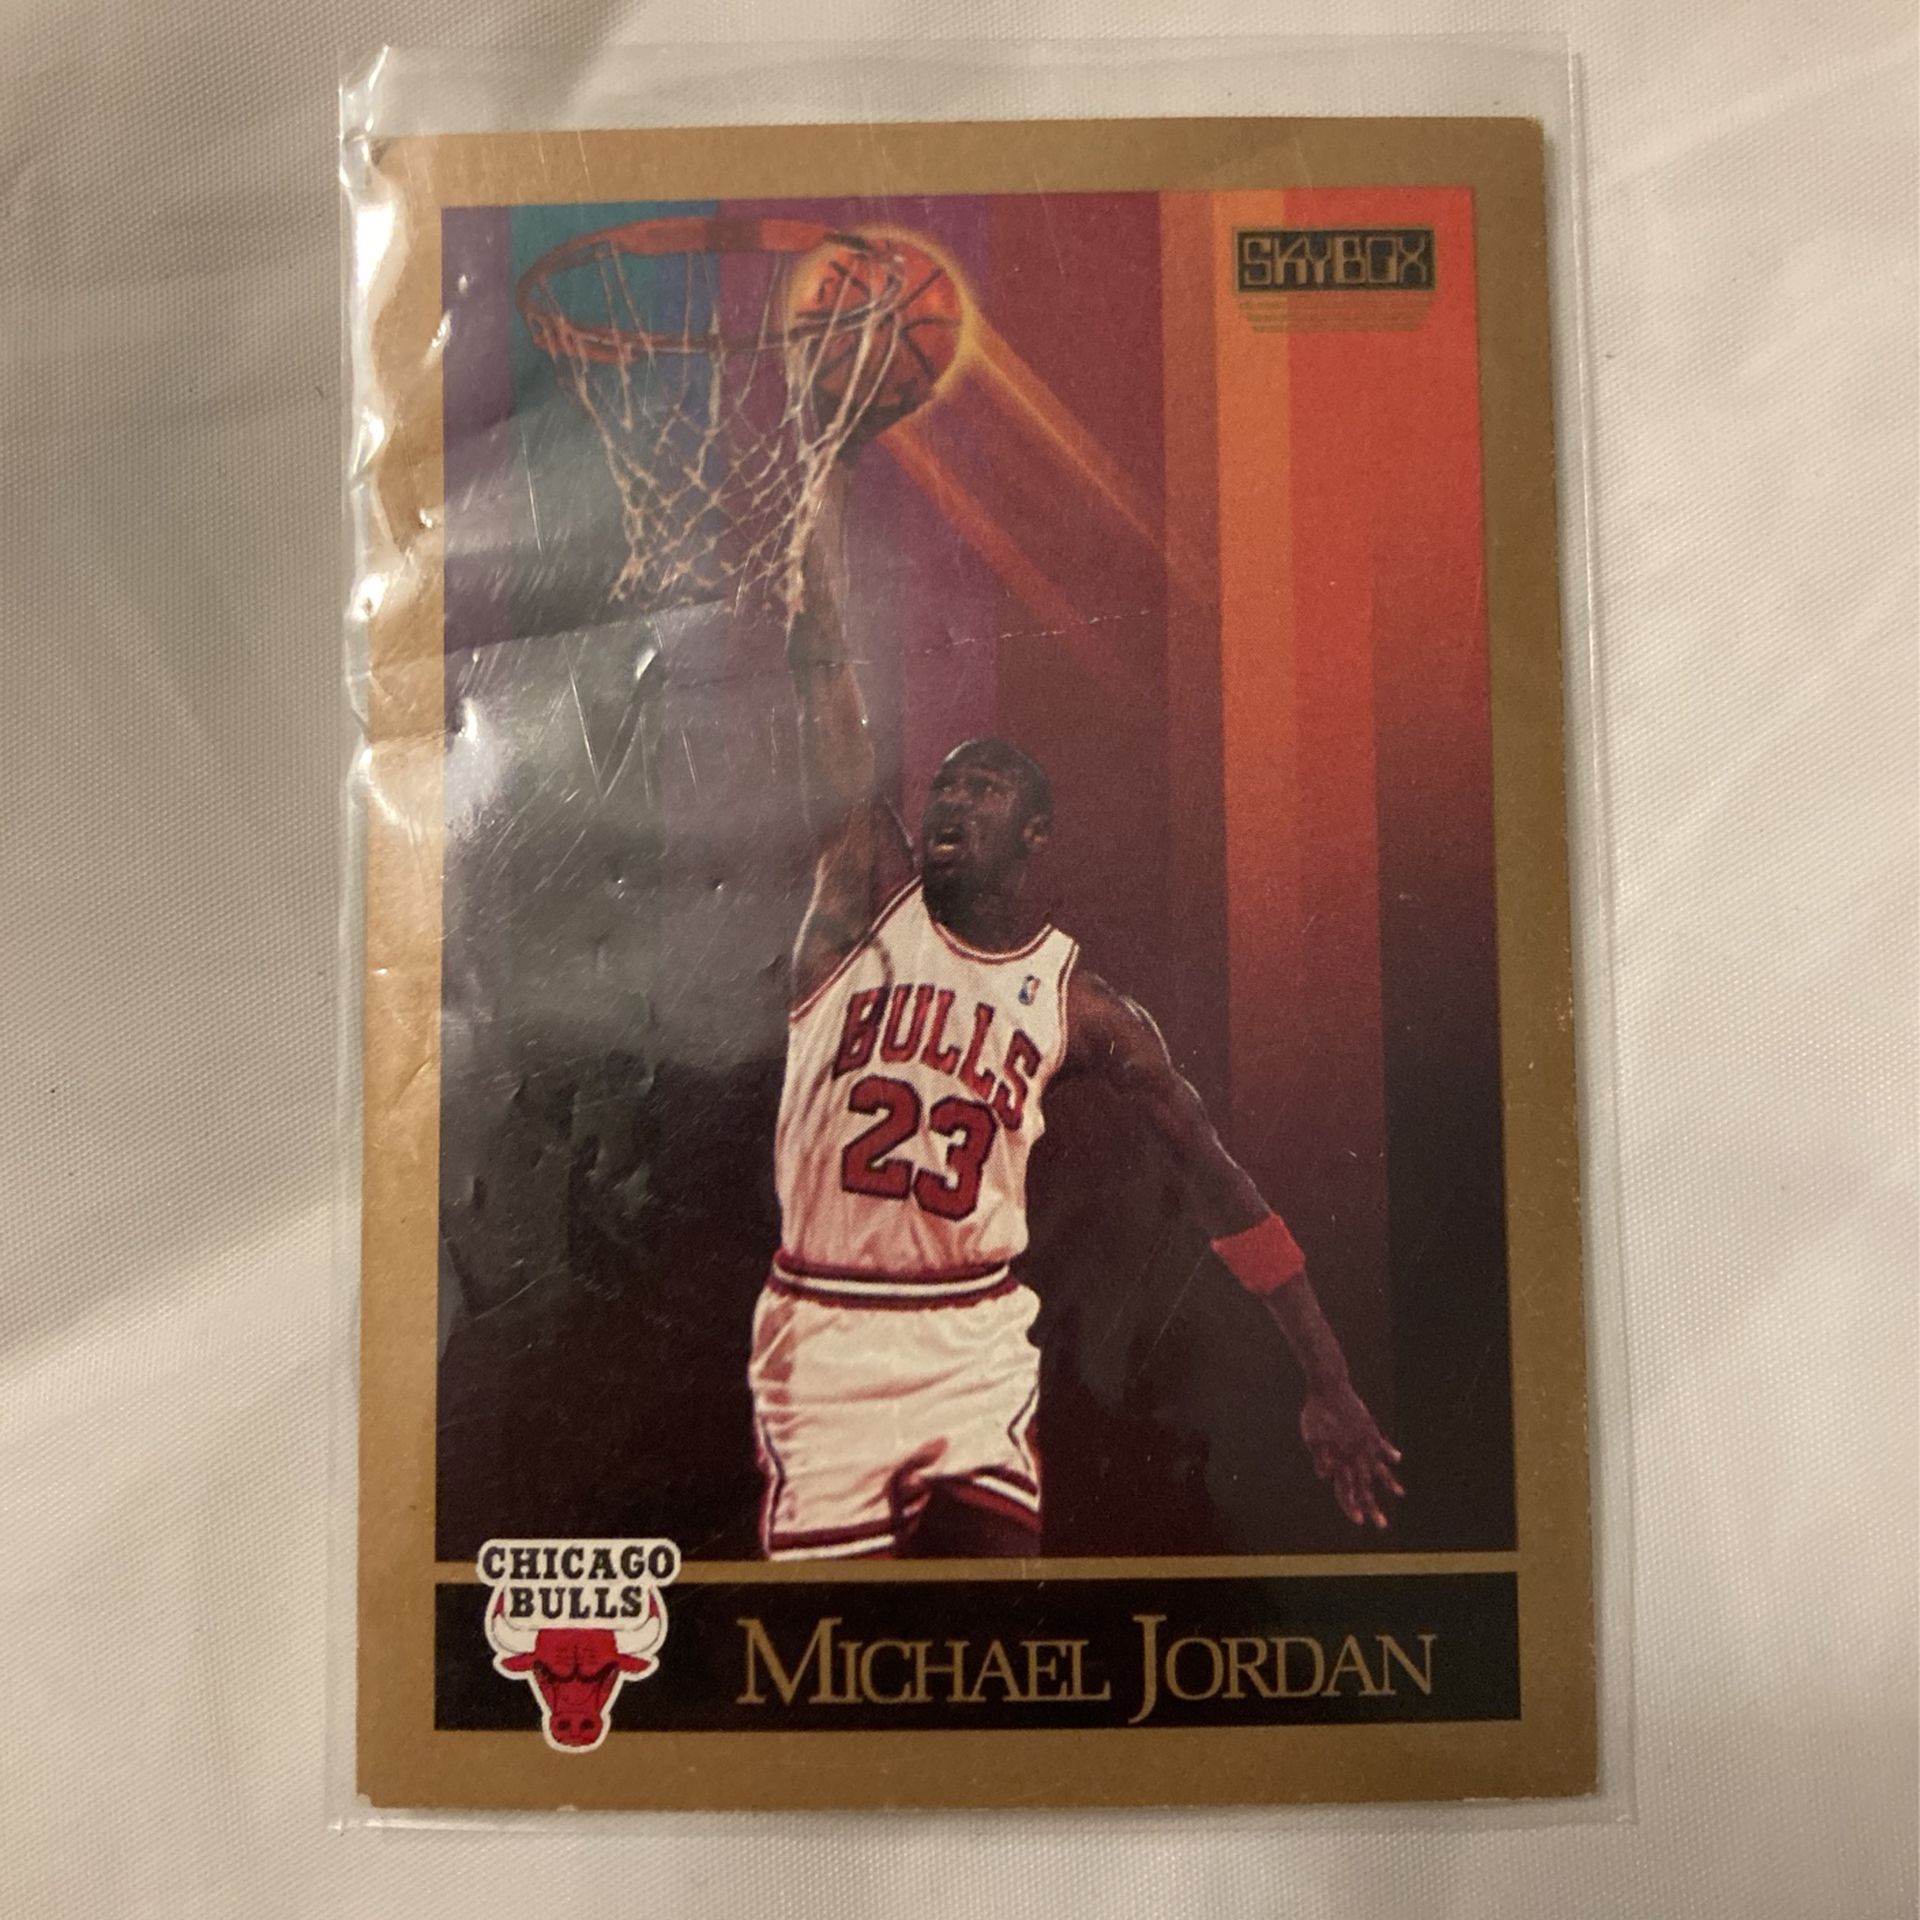 Michael Jordan basketball card skybox